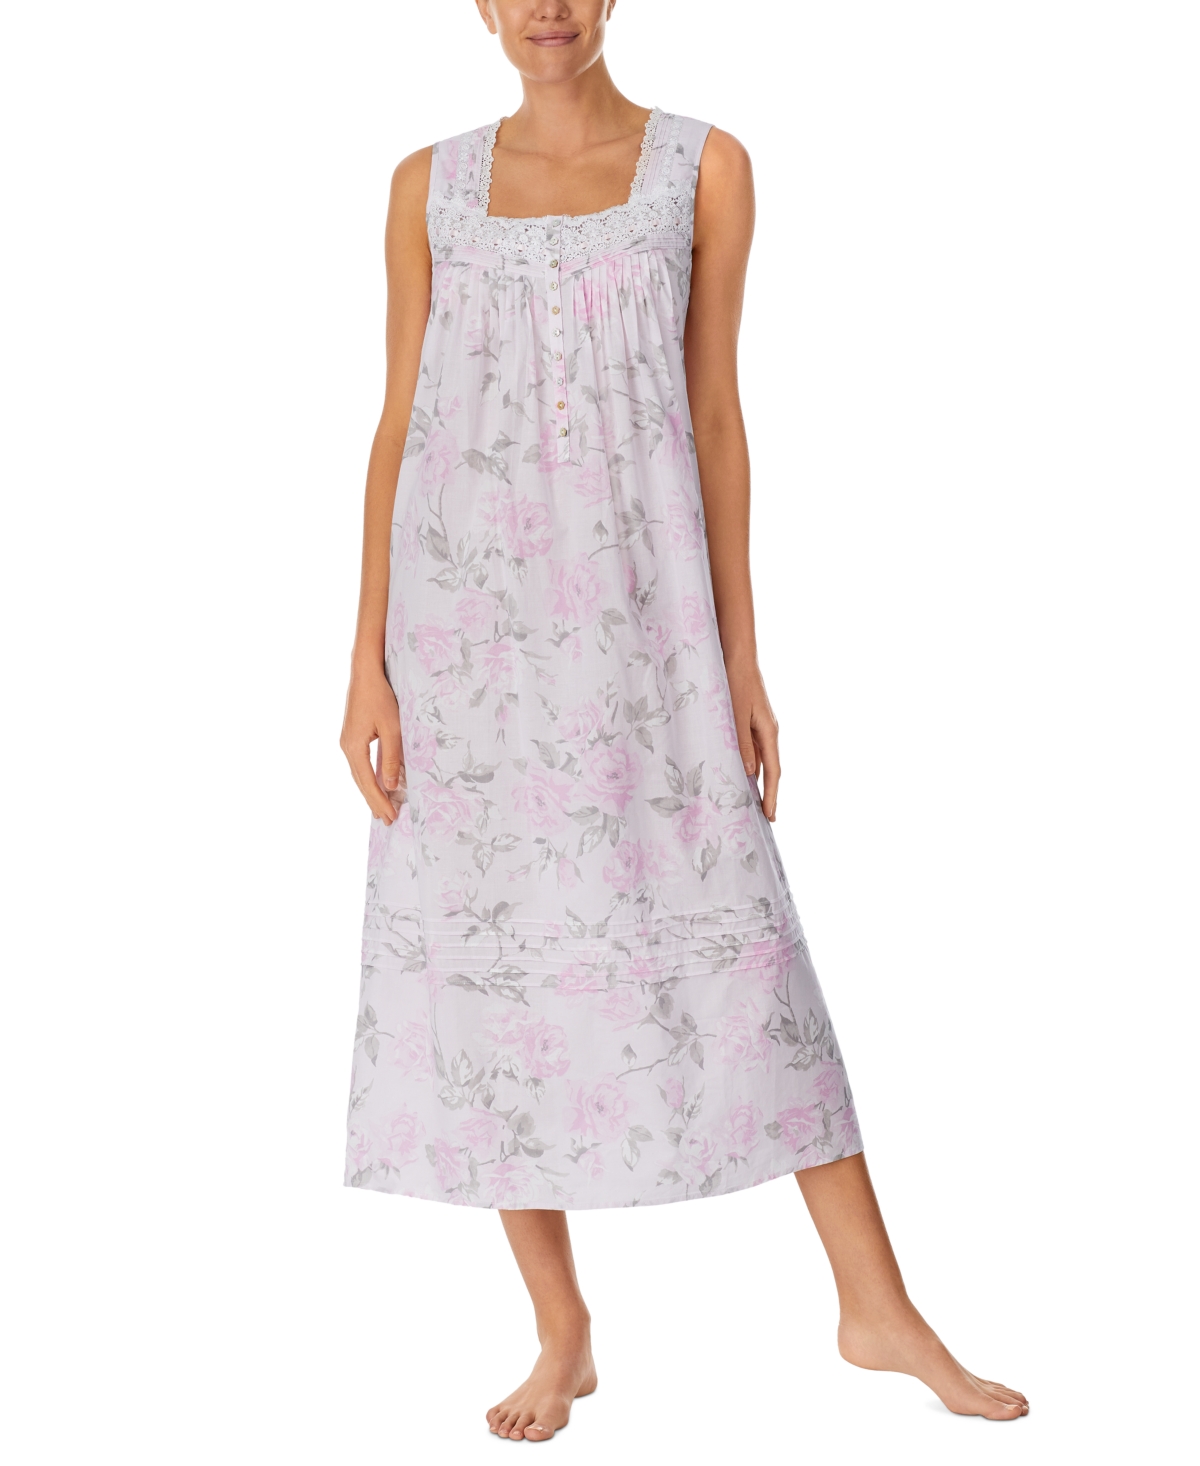 Women's Cotton Sleeveless Ballet Nightgown - Rose Floral